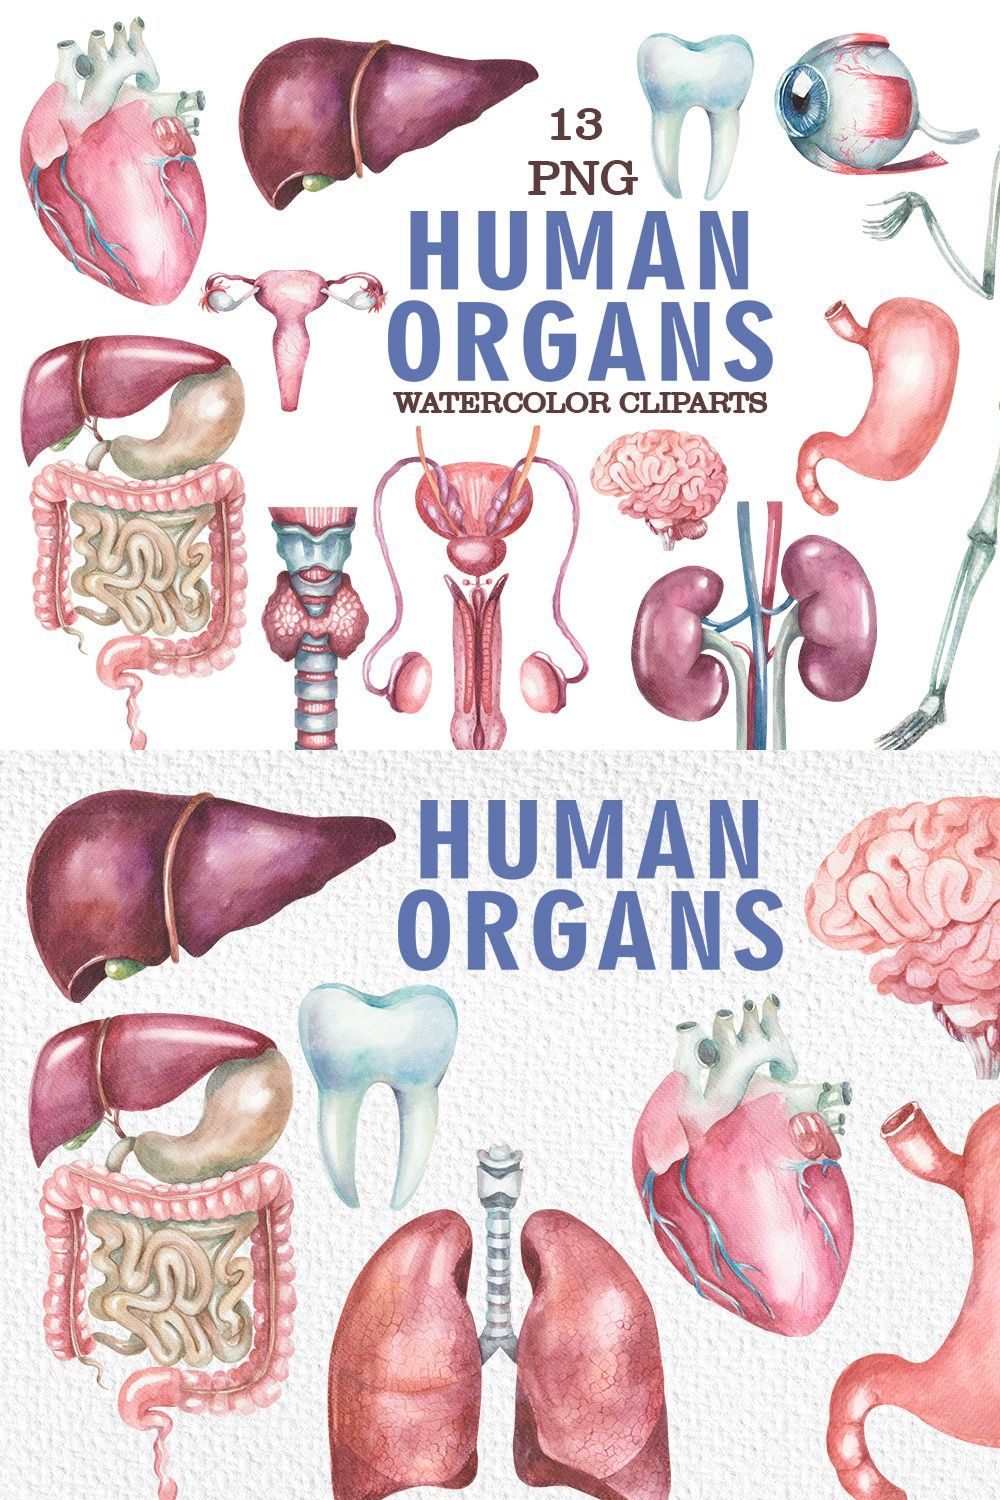 Watercolor human organs clipart pinterest preview image.